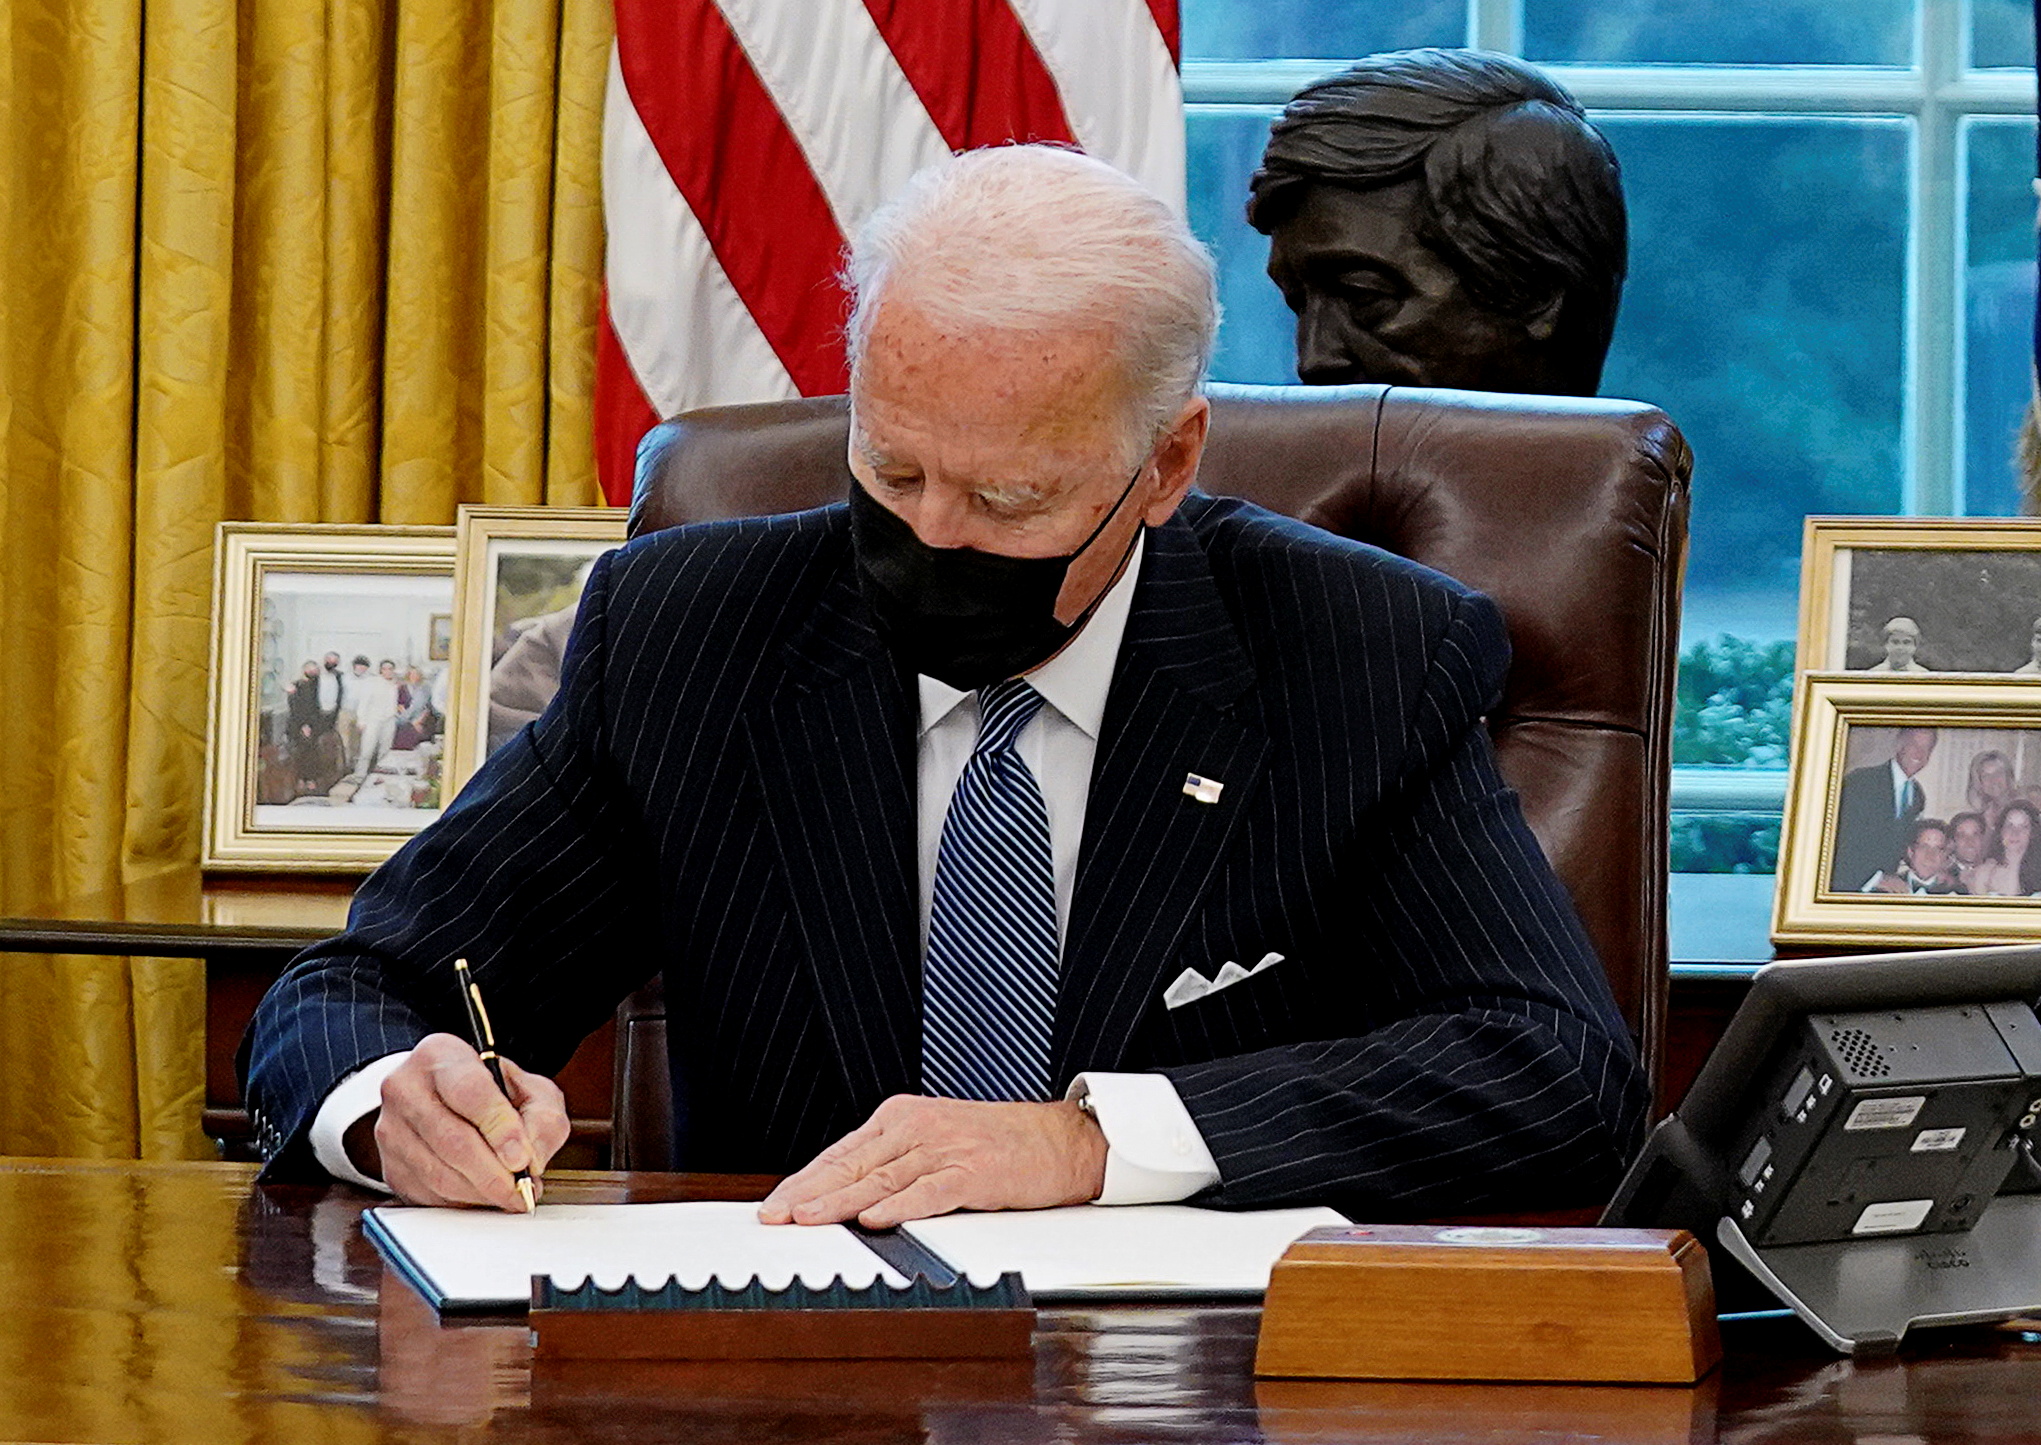 U.S. President Biden meets with new U.S. Defense Secretary Lloyd Austin at the White House in Washington